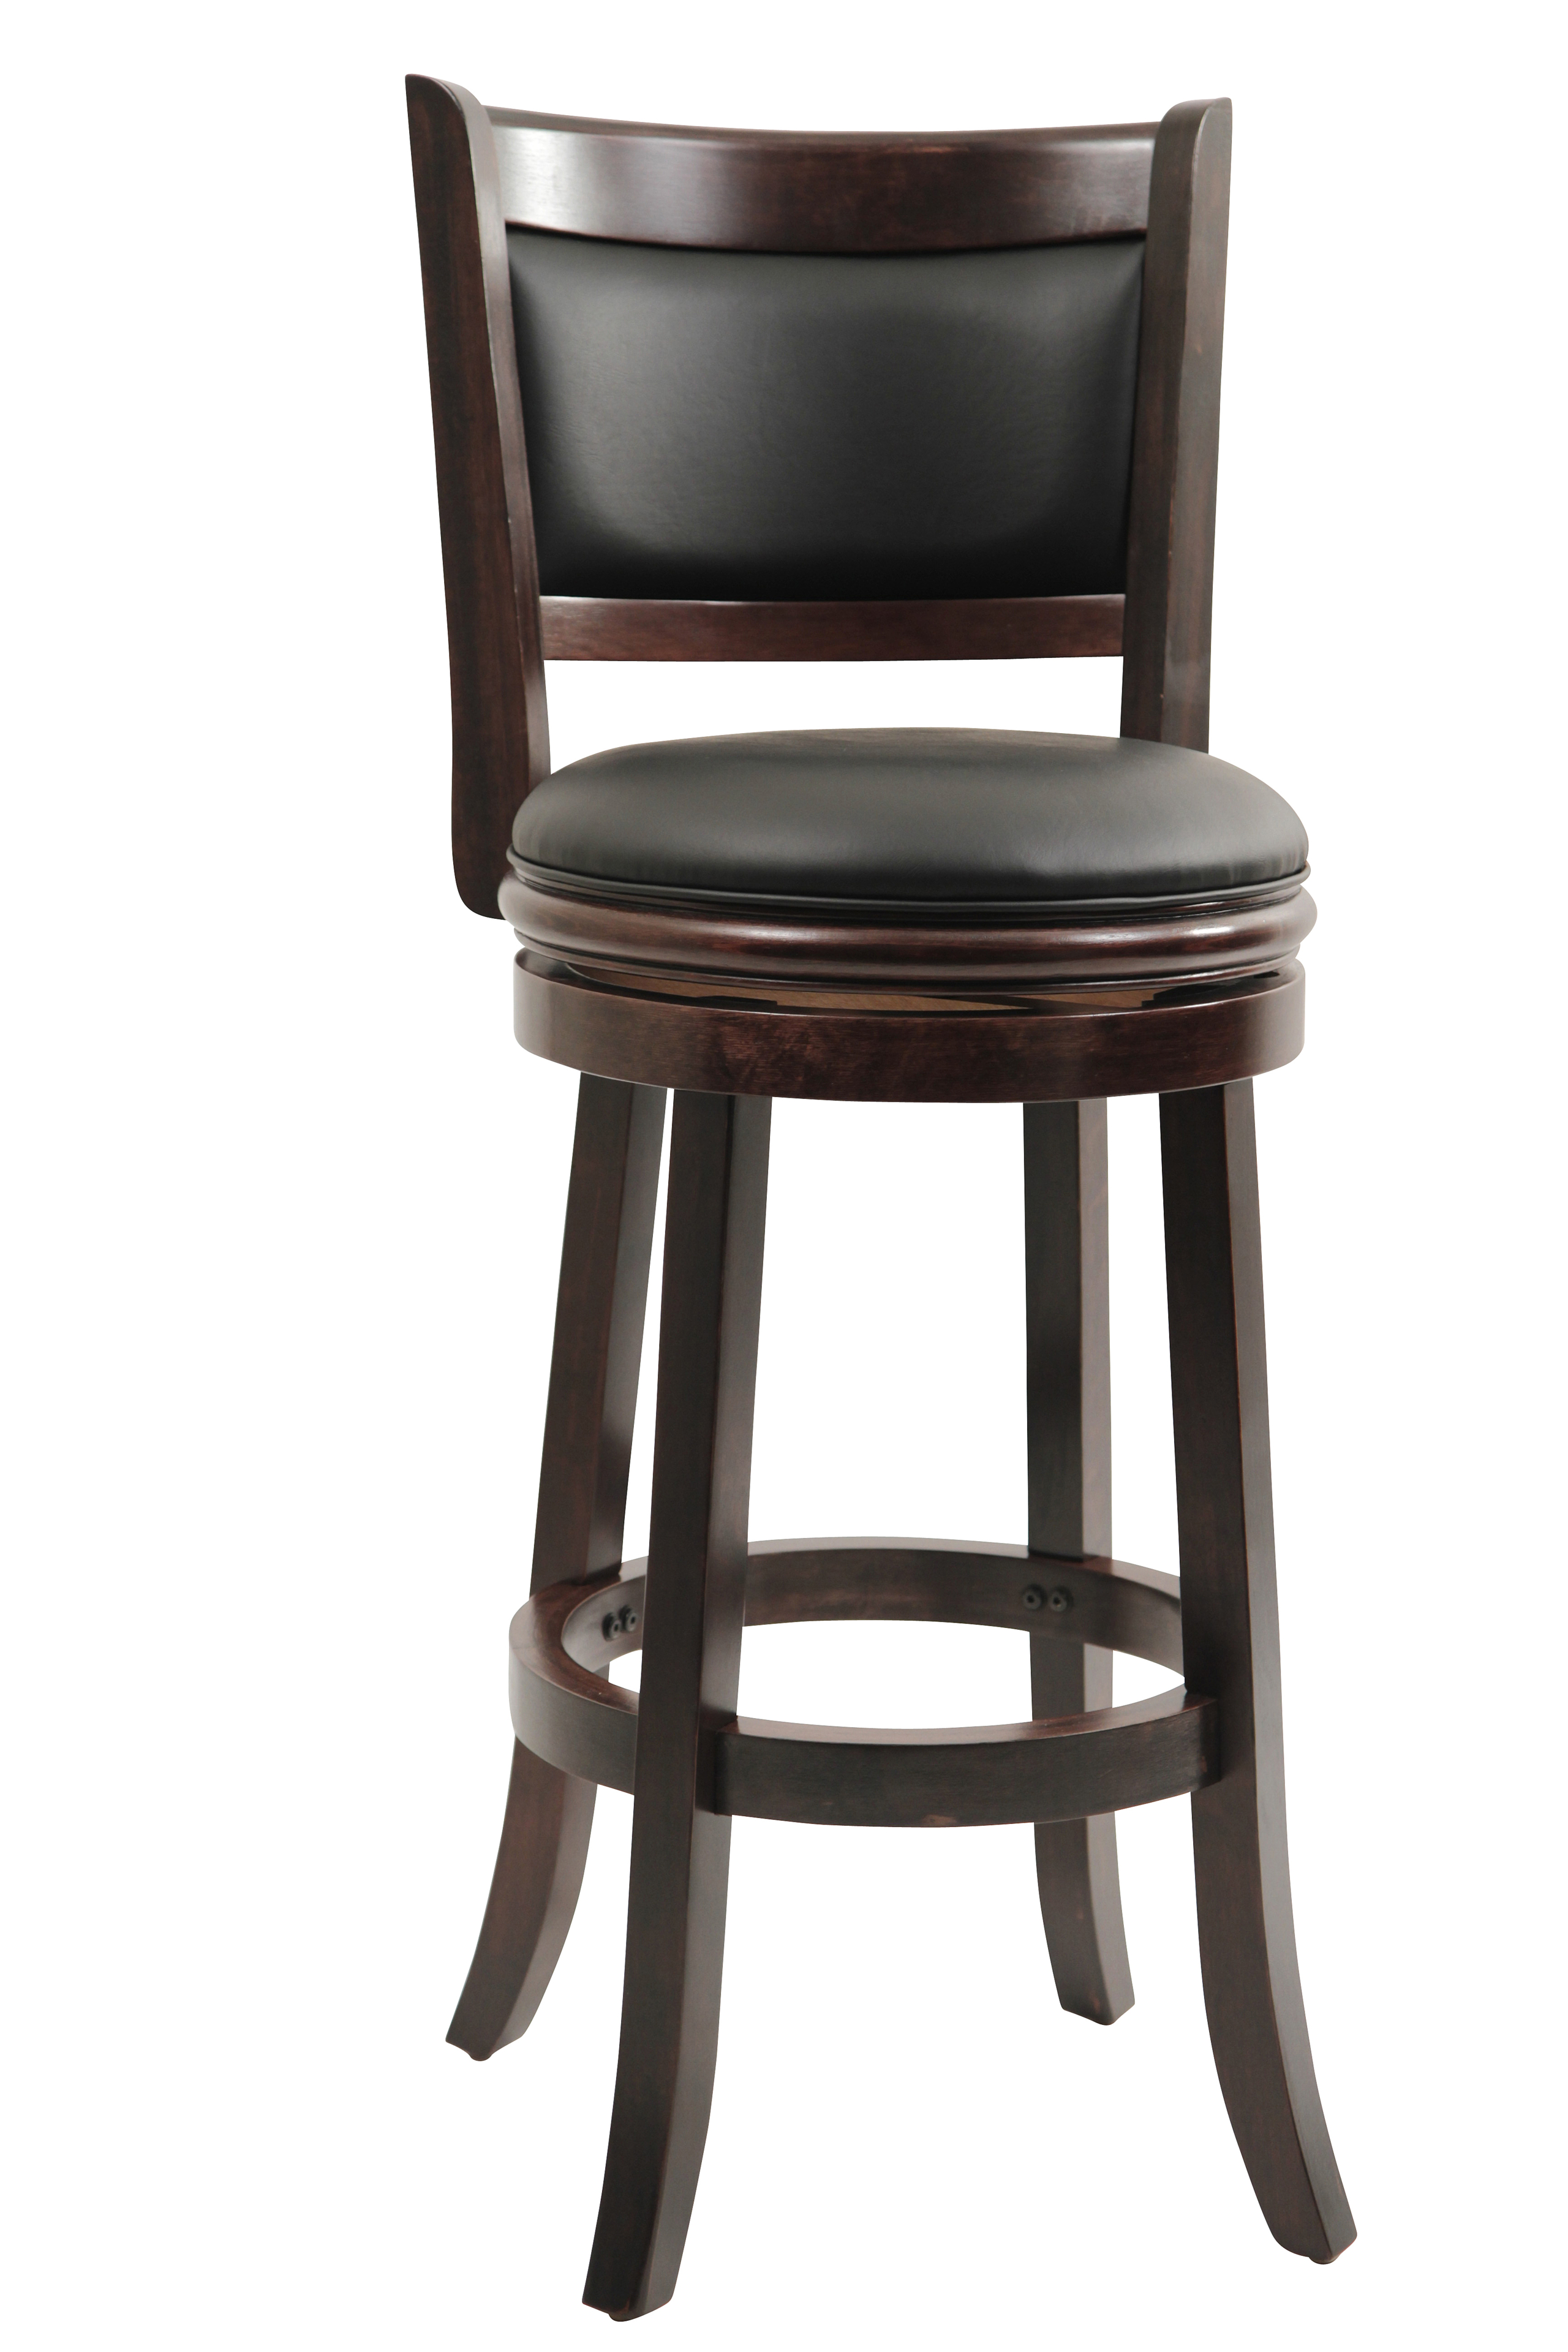 Solid wood swivel bar stools 5